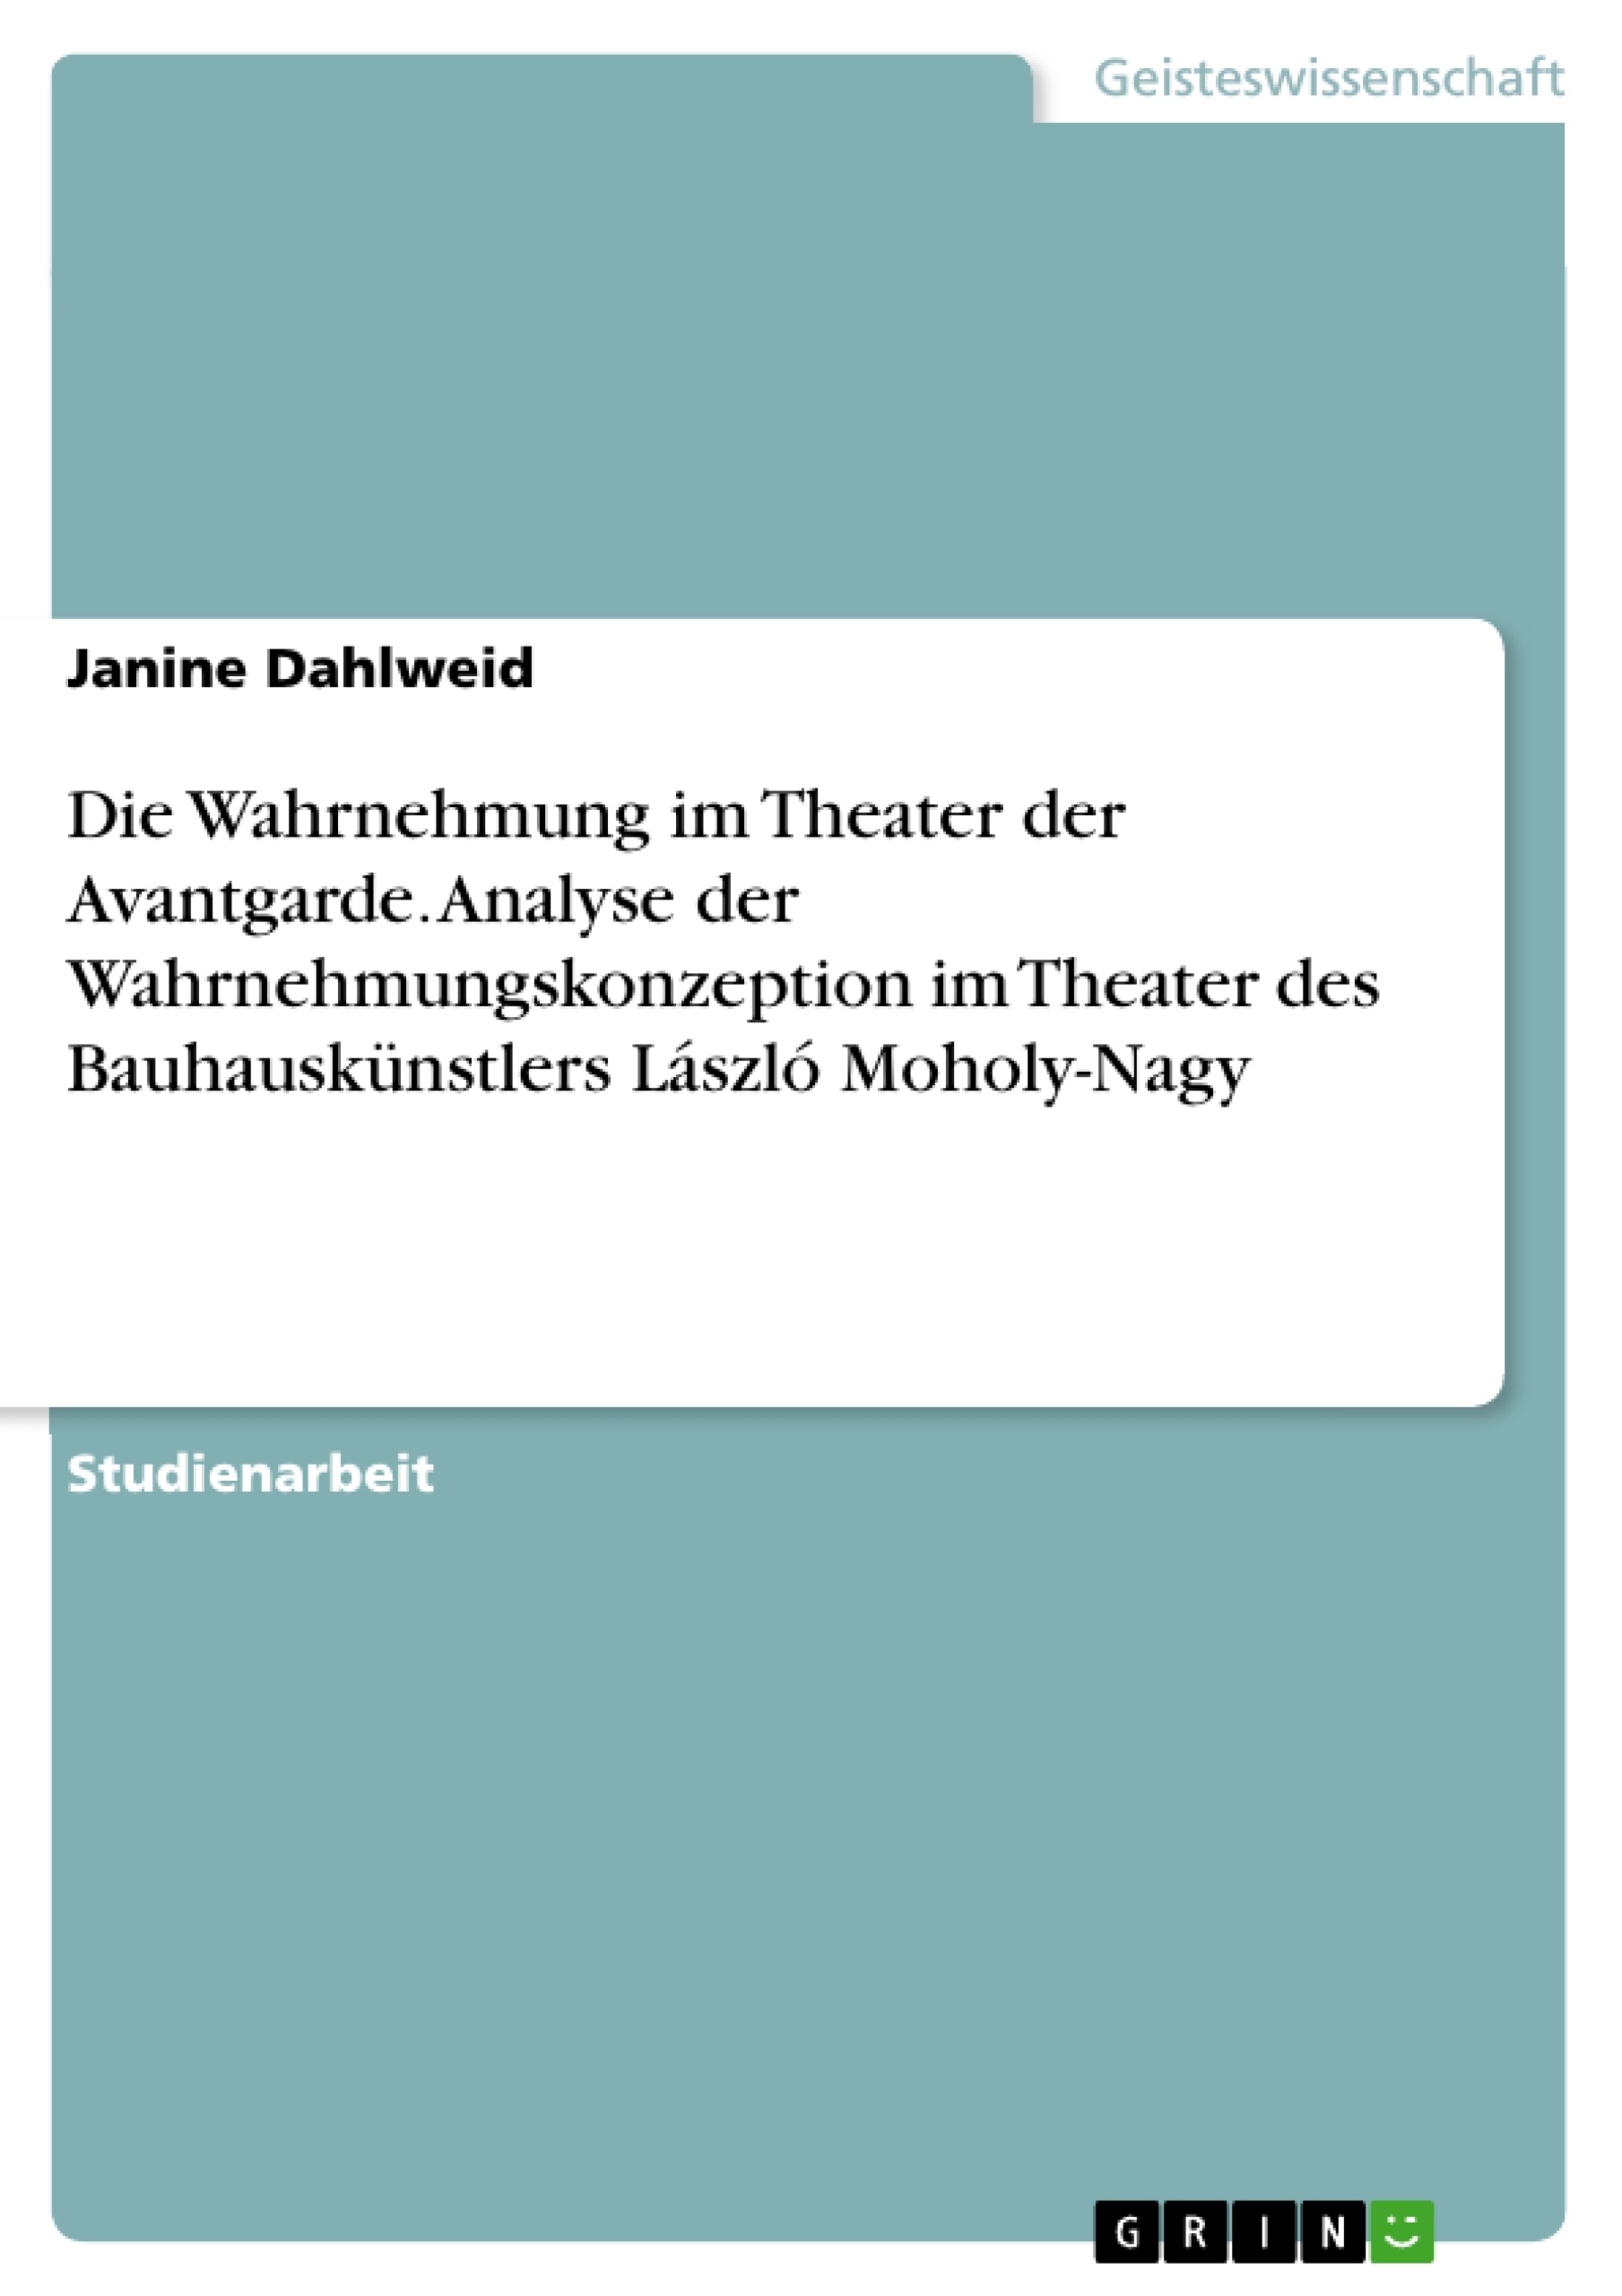 Título: Die Wahrnehmung im Theater der Avantgarde. Analyse der Wahrnehmungskonzeption im Theater des Bauhauskünstlers László Moholy-Nagy